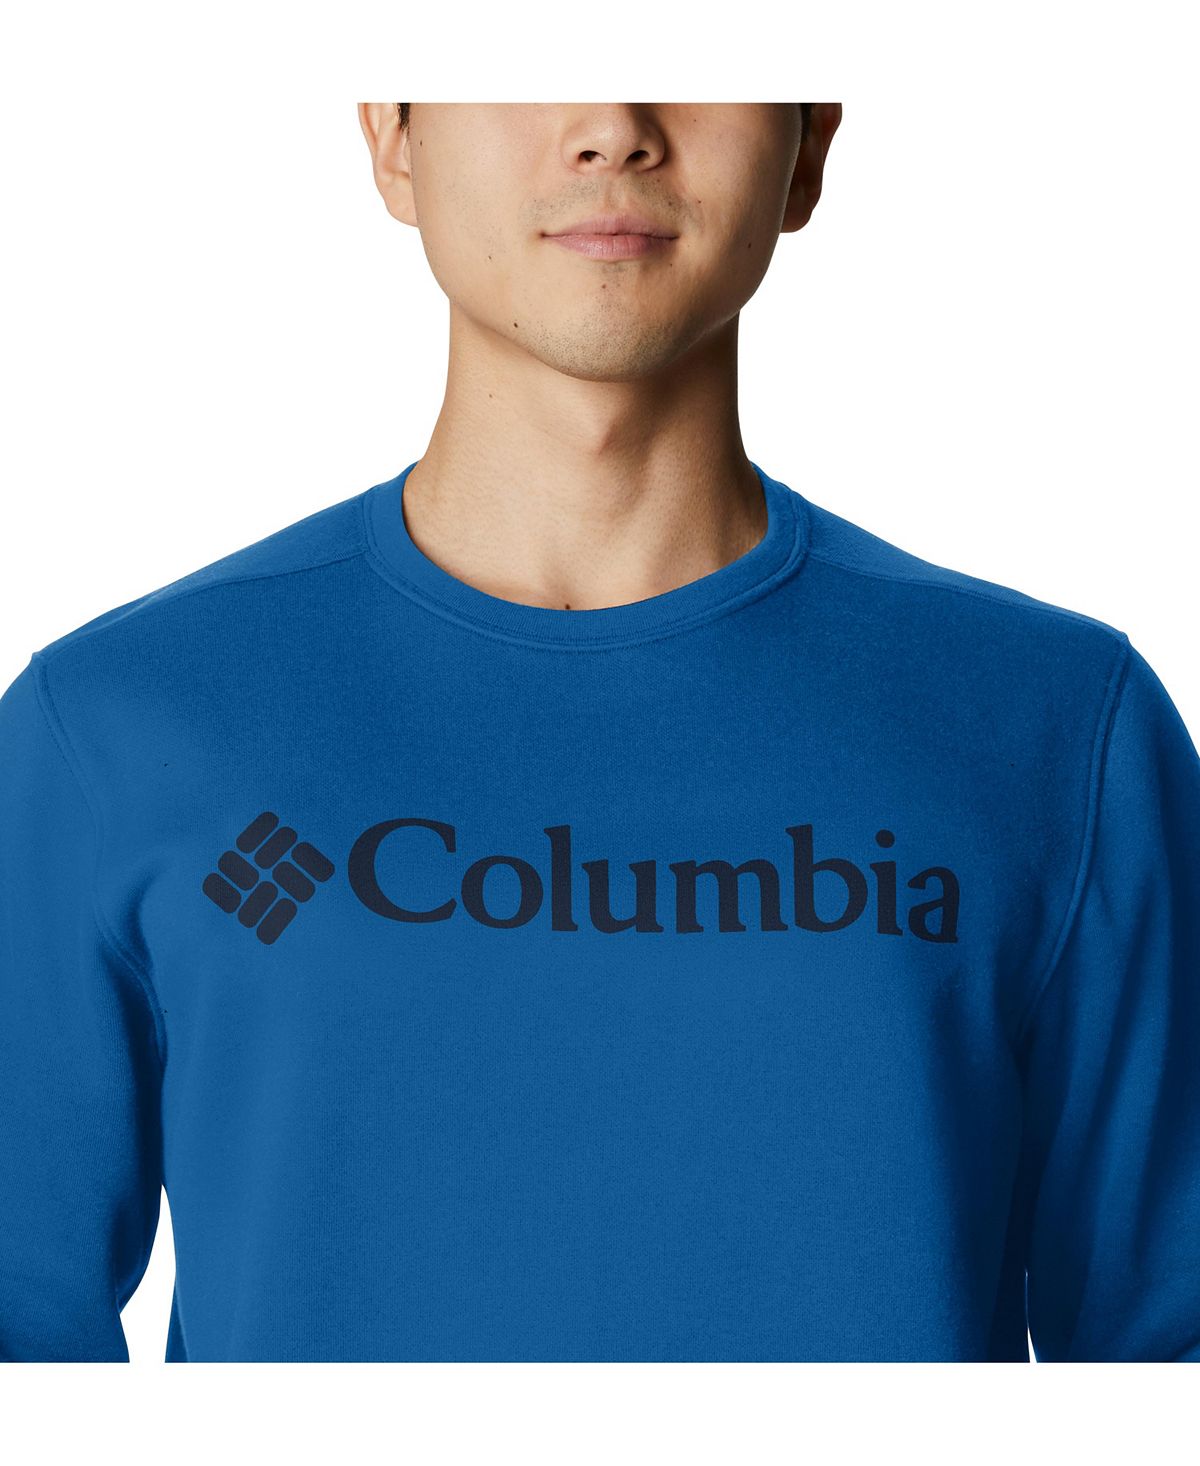 Columbia Trek Crew Sweatshirt Bright Indigo, Columbia Navy